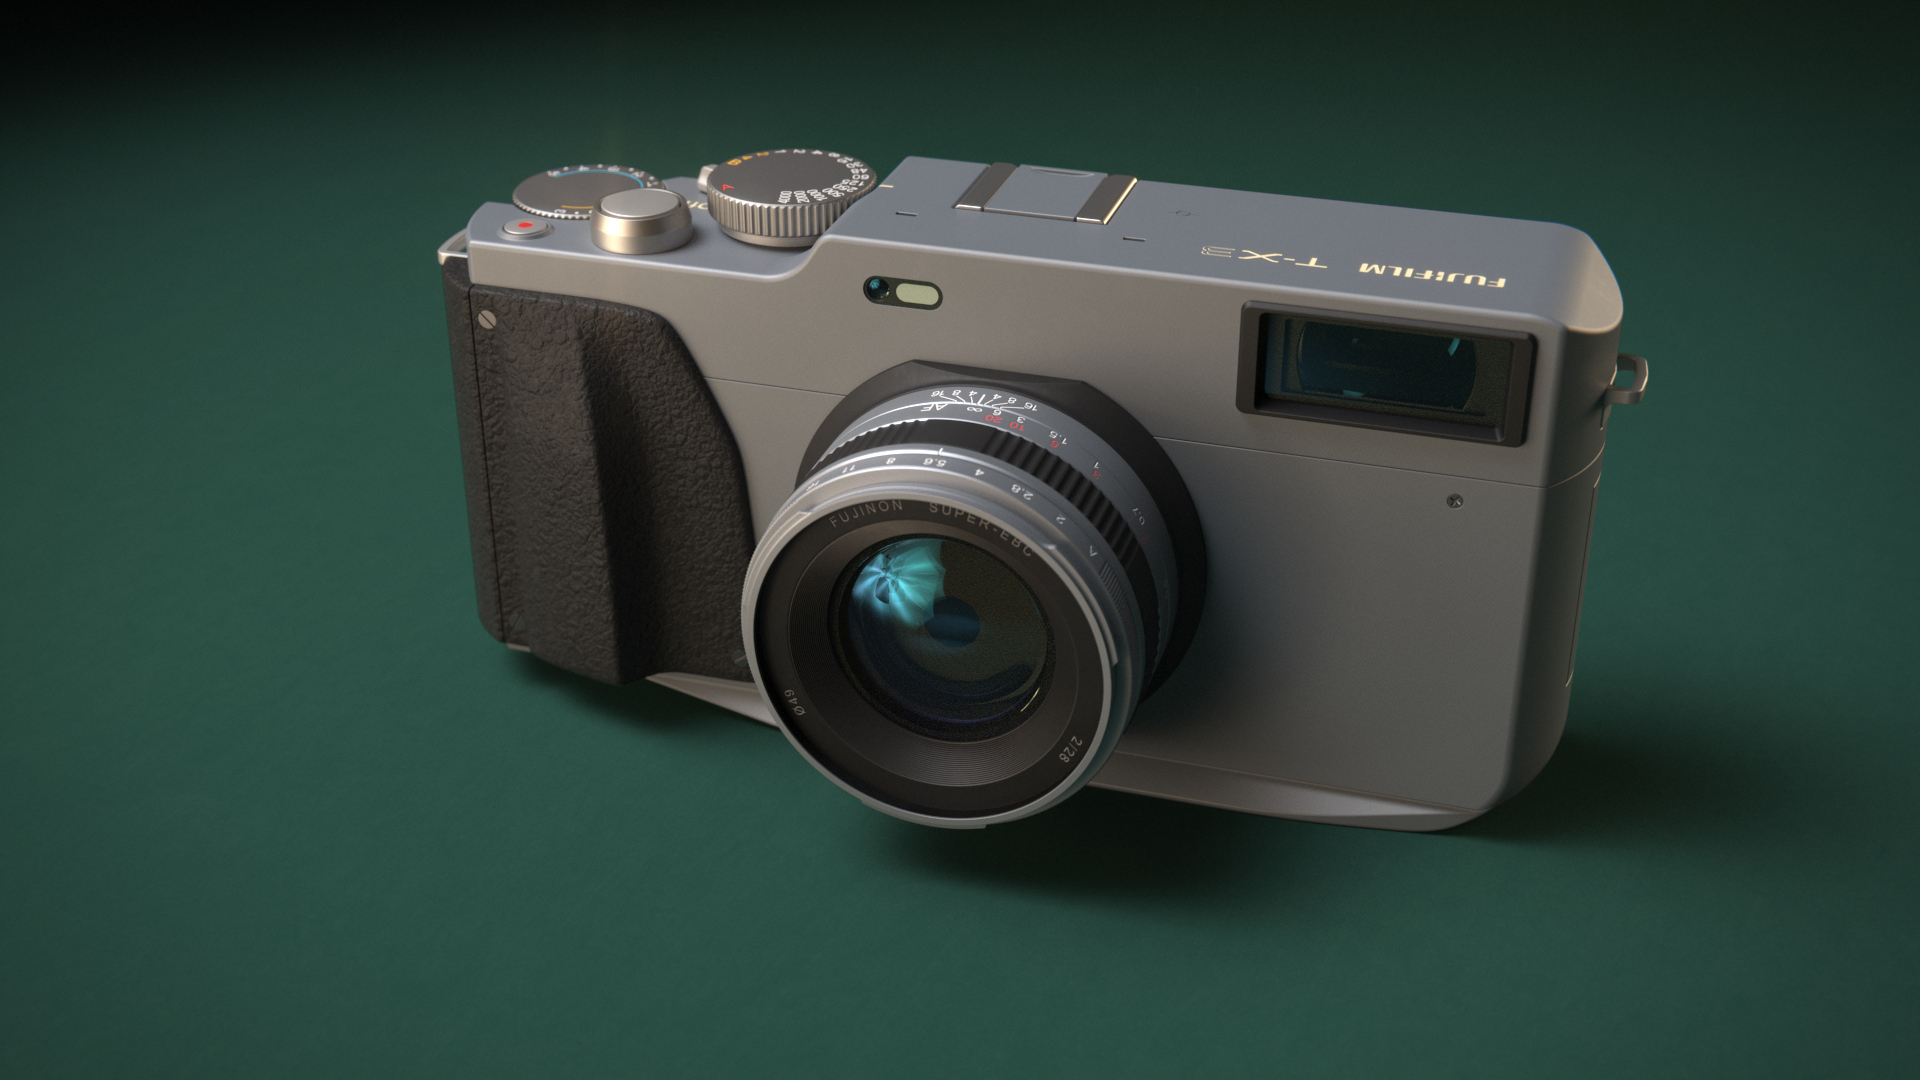 atoom rijstwijn spanning Meet the Fujifilm TX-3 XPan Digital Camera (Concept) - Fuji Rumors